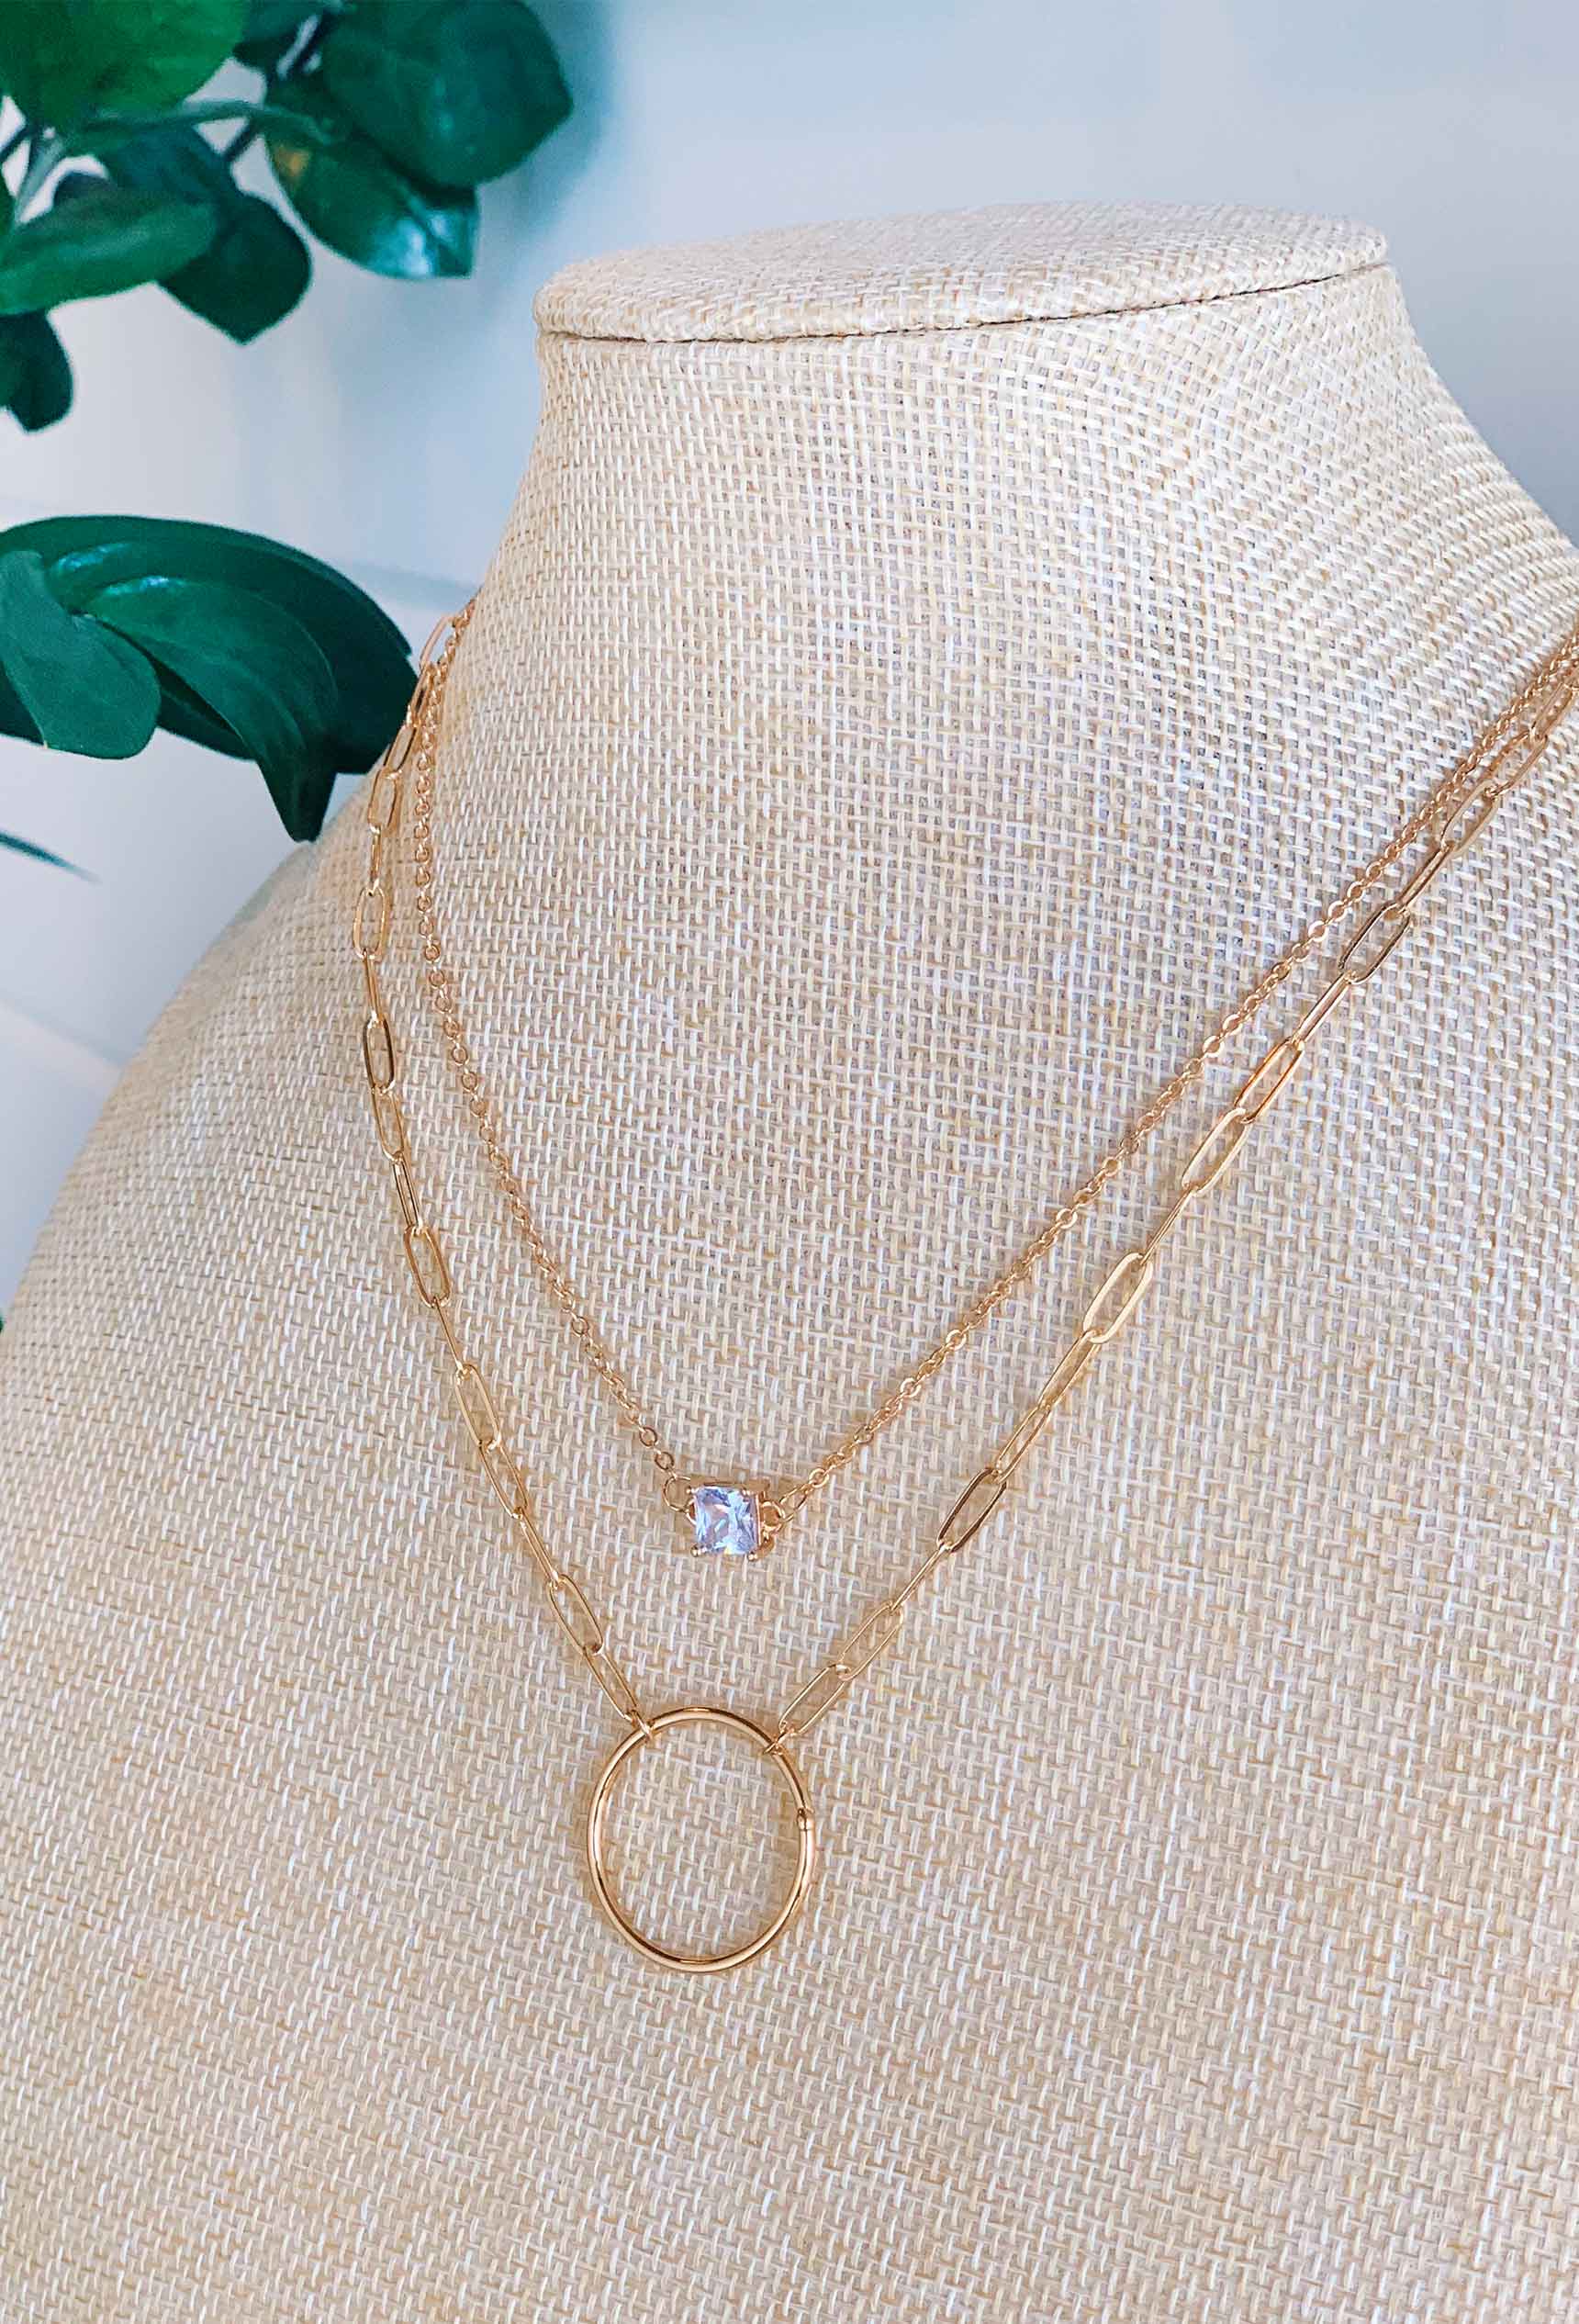 Gold Circle & Crystal Layered Necklace, layered gold necklace with crystal pendant and circle charm 